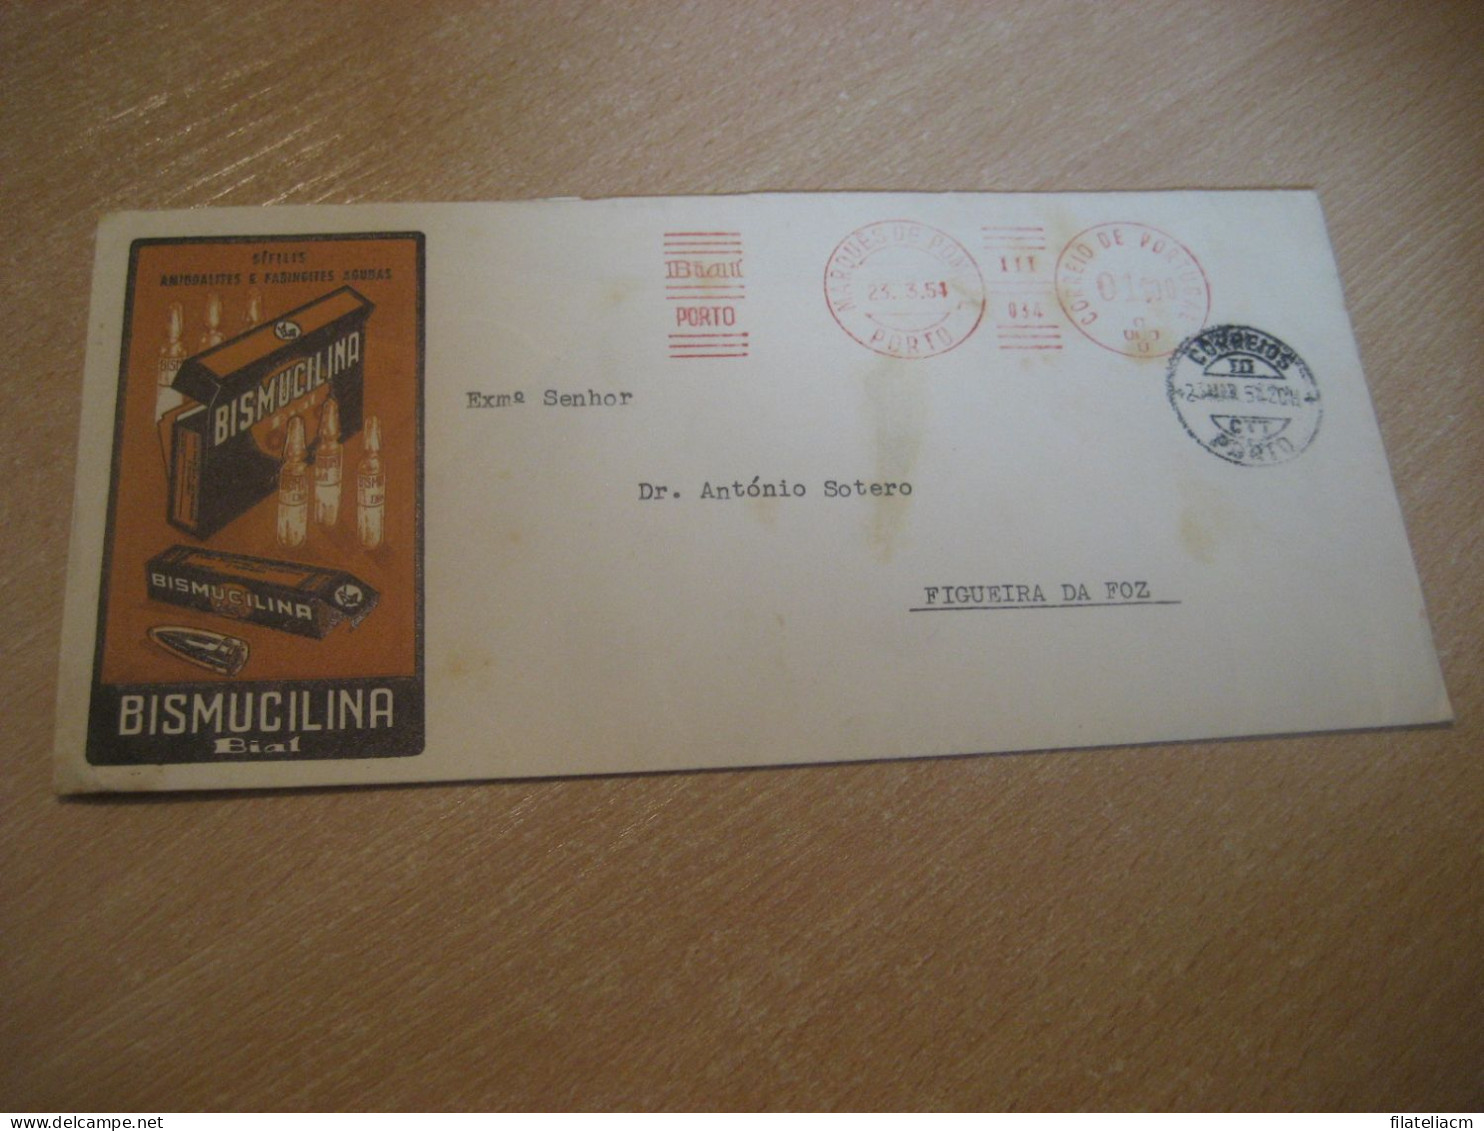 PORTO 1954 To Figueira Da Foz Bial Bismucilina Pharmacy Health Chemical Meter Mail Cancel Cover PORTUGAL - Briefe U. Dokumente